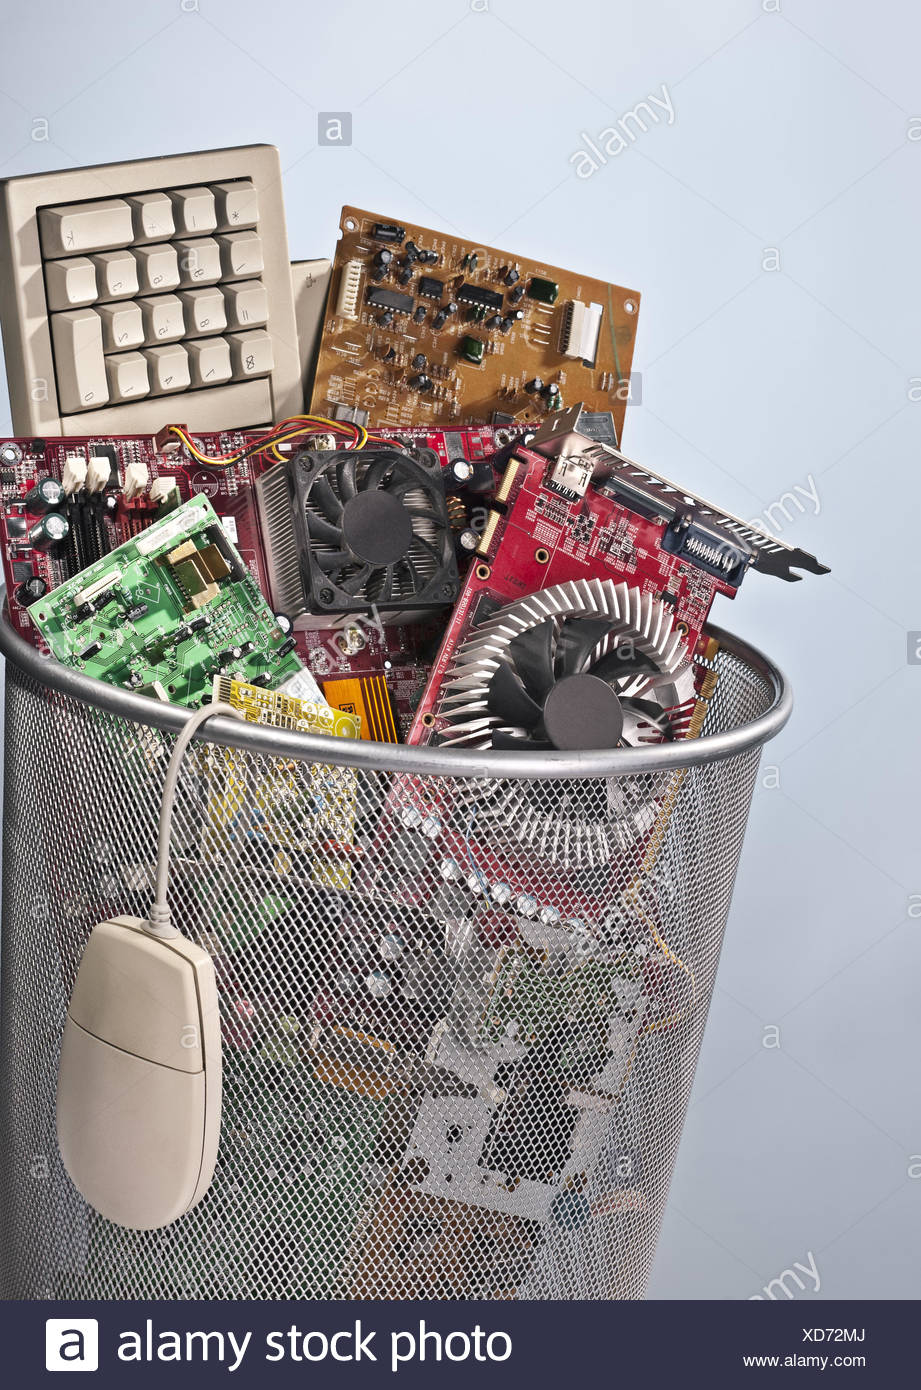 Paper basket full of electronic waste Stock Photo - Alamy